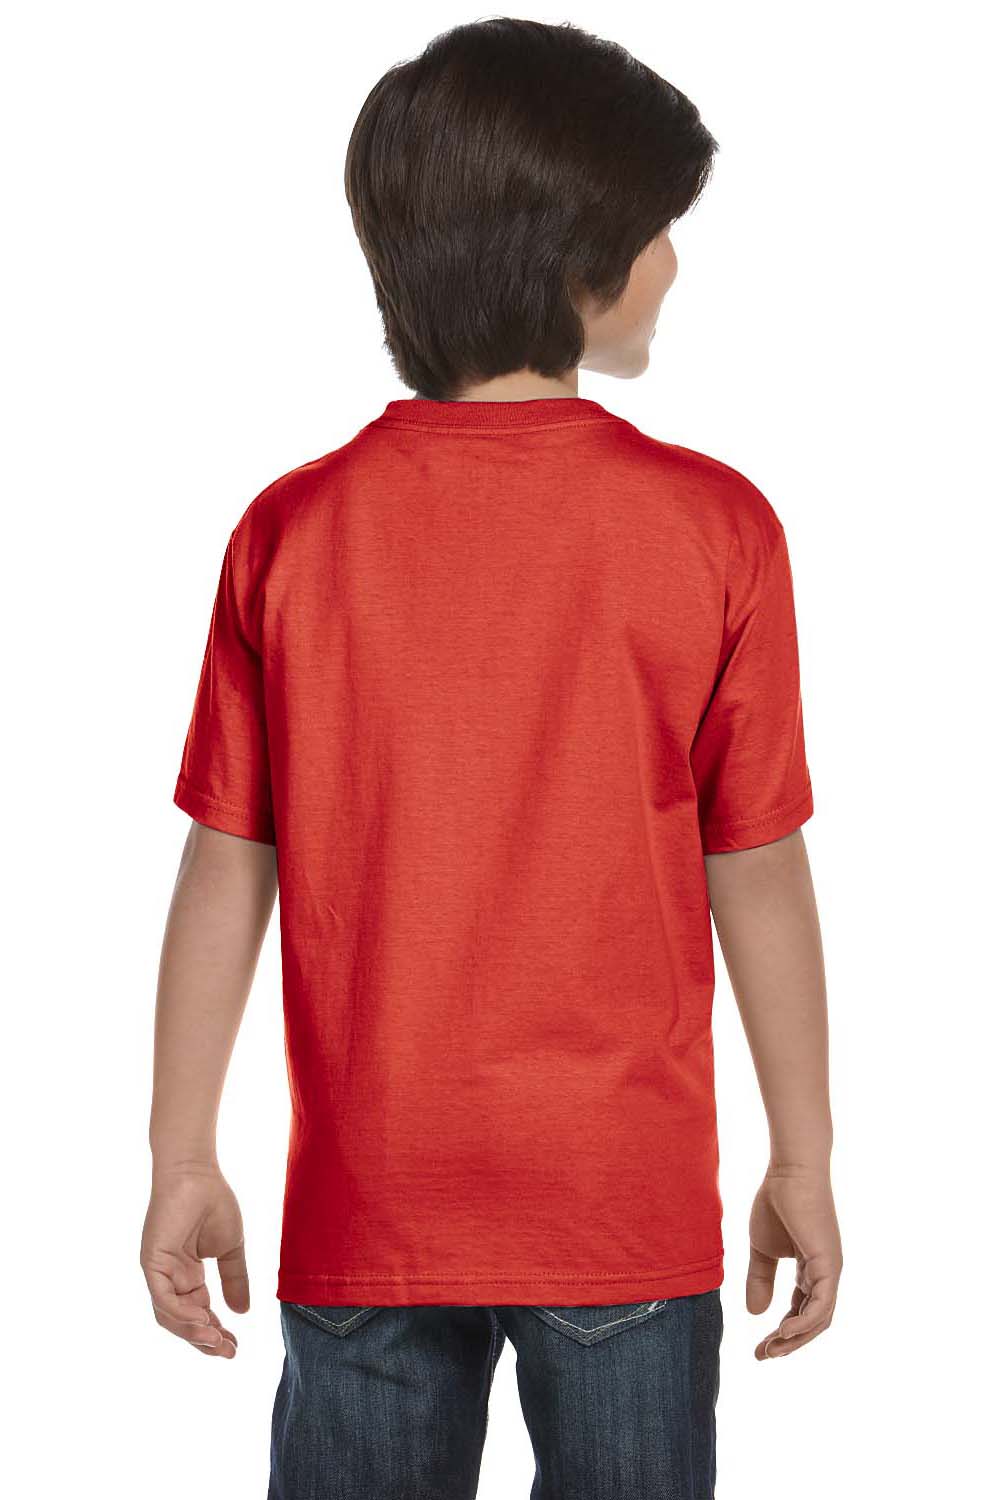 Hanes 5480 Youth ComfortSoft Short Sleeve Crewneck T-Shirt Red Back